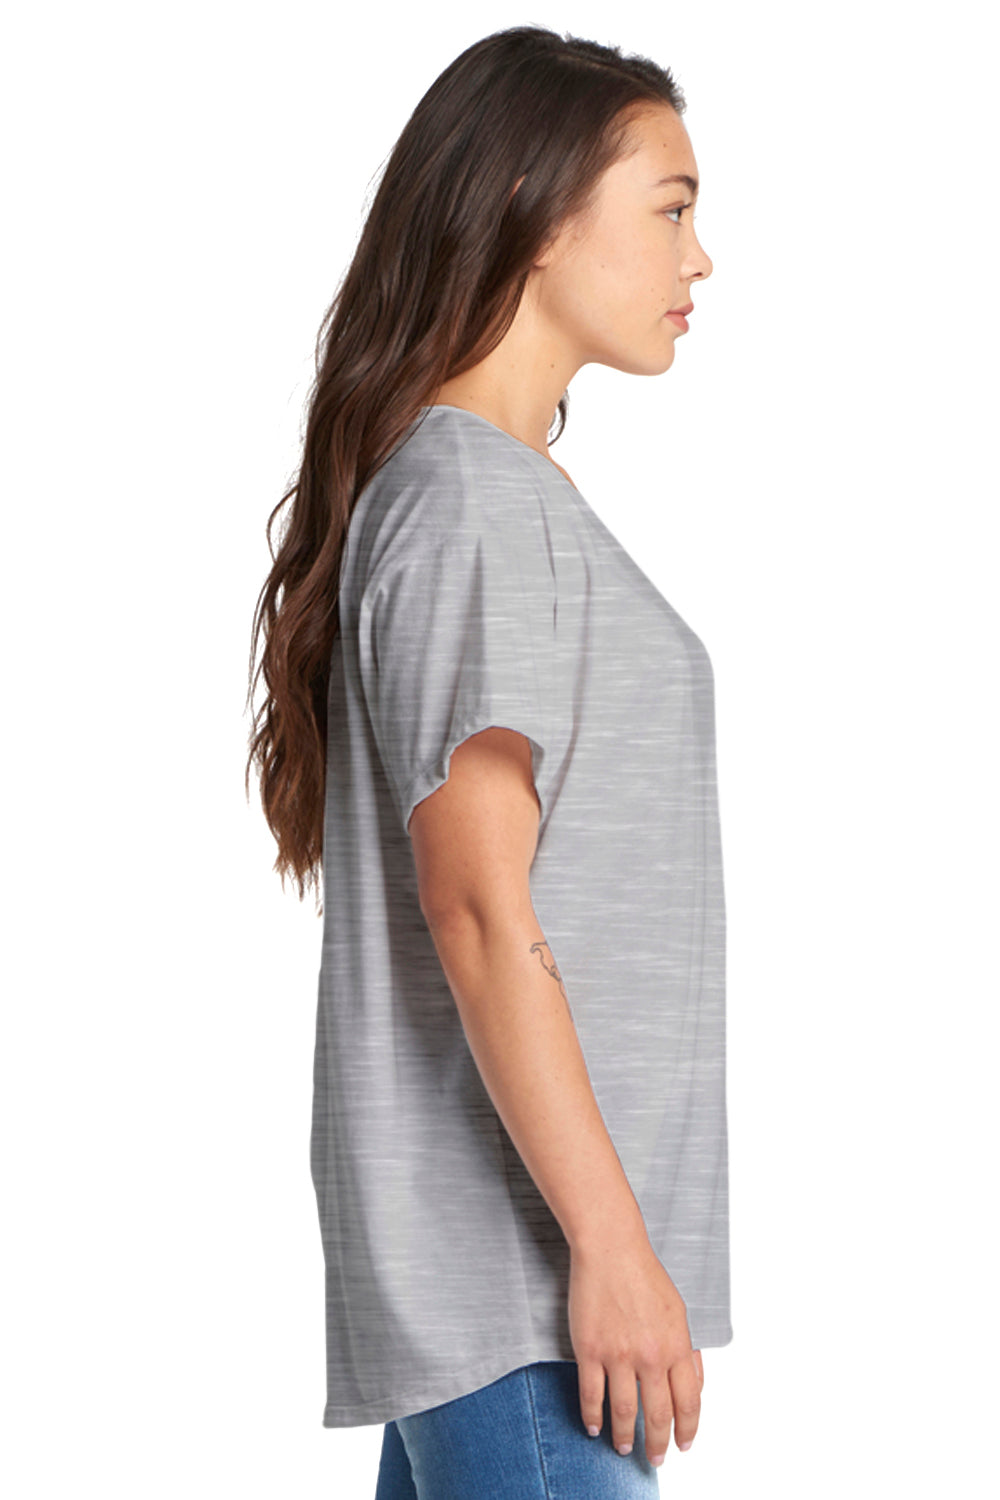 Next Level N1530 Womens Ideal Flow Short Sleeve Crewneck T-Shirt Heather Grey Side